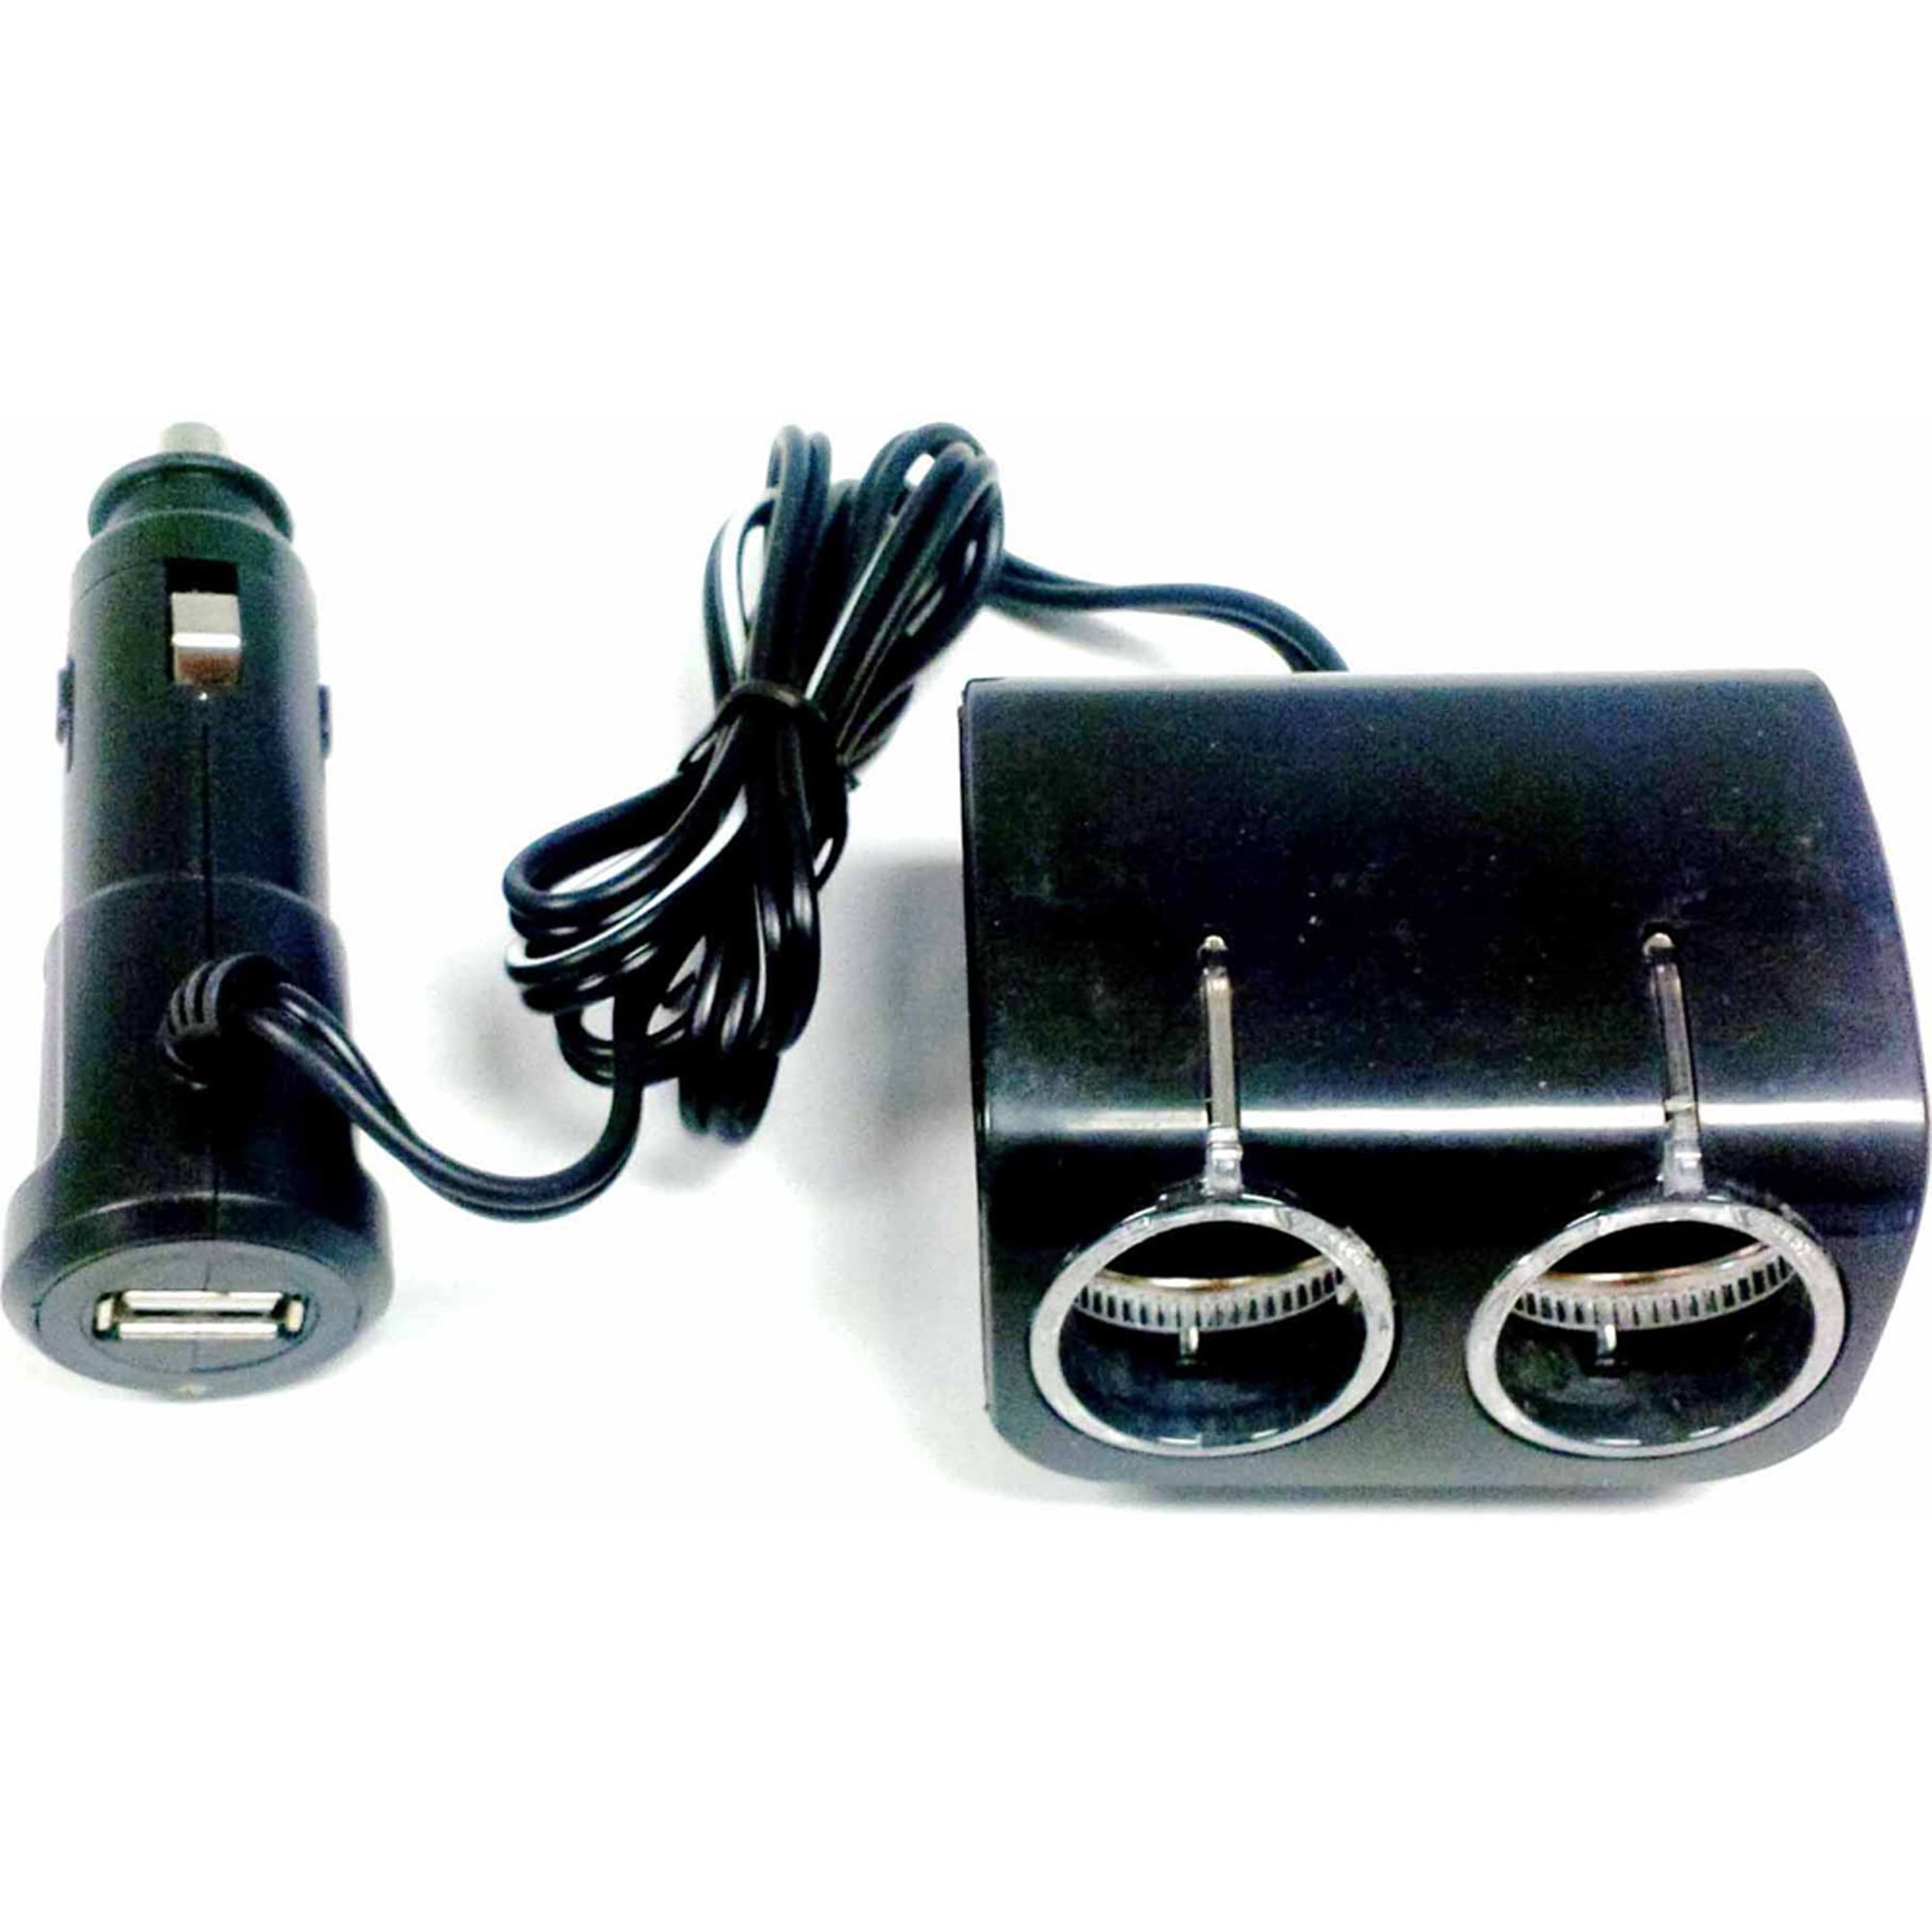 Koolatron 402371 12V Cigarette Lighter Socket with USB